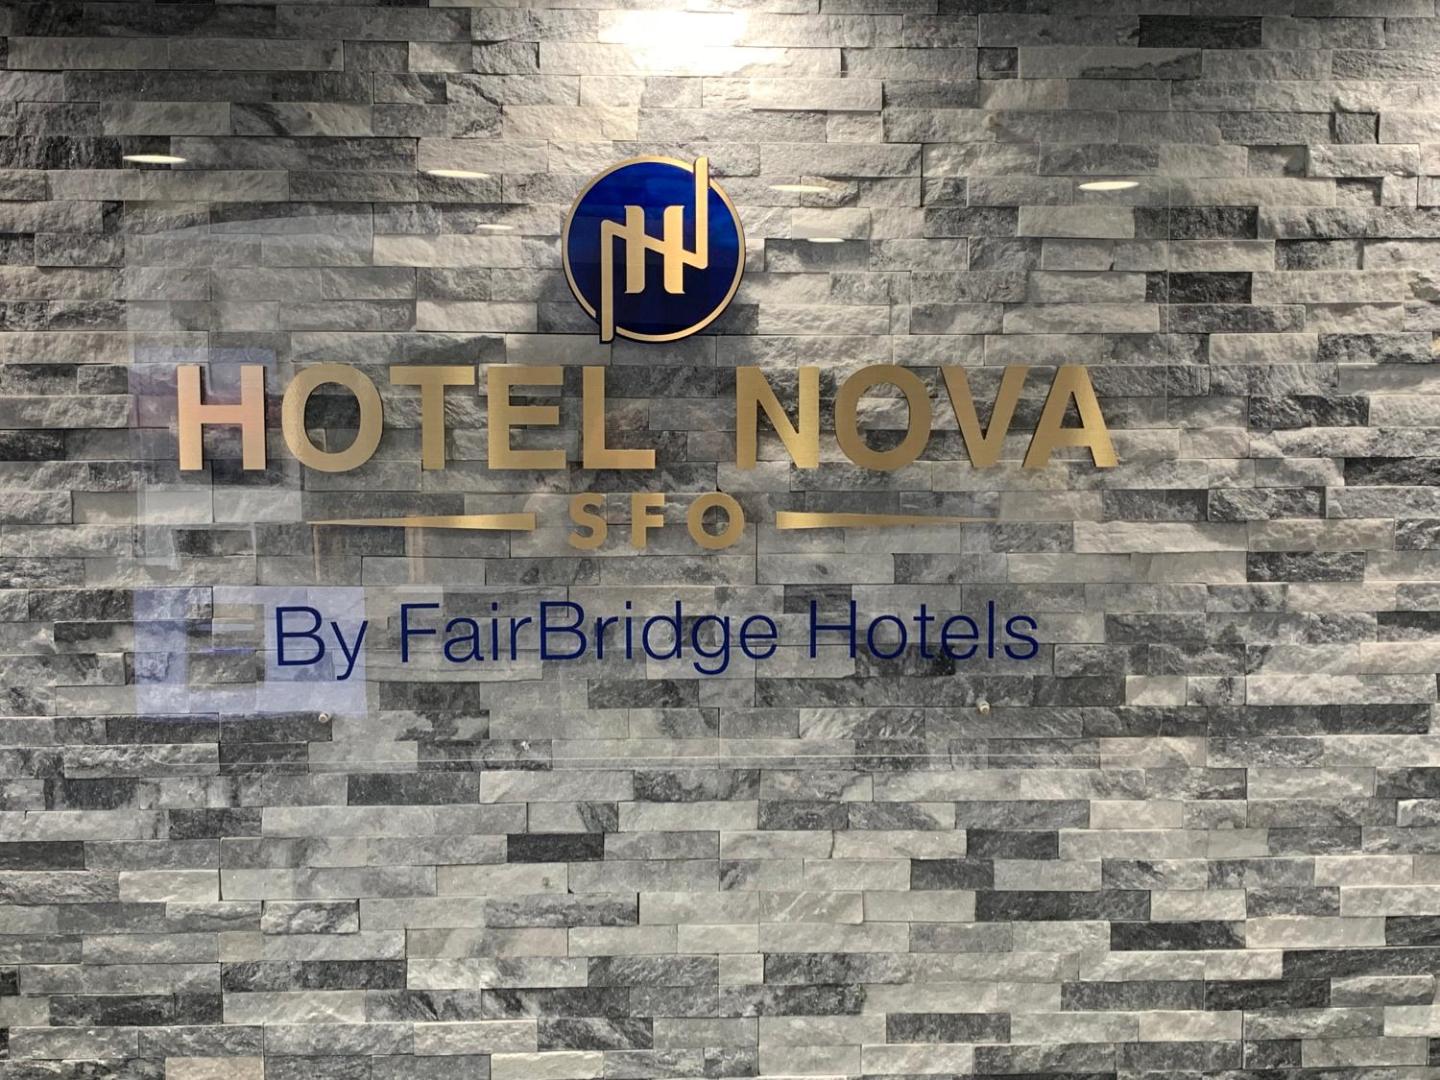 Hotel Nova SFO by FairBridge